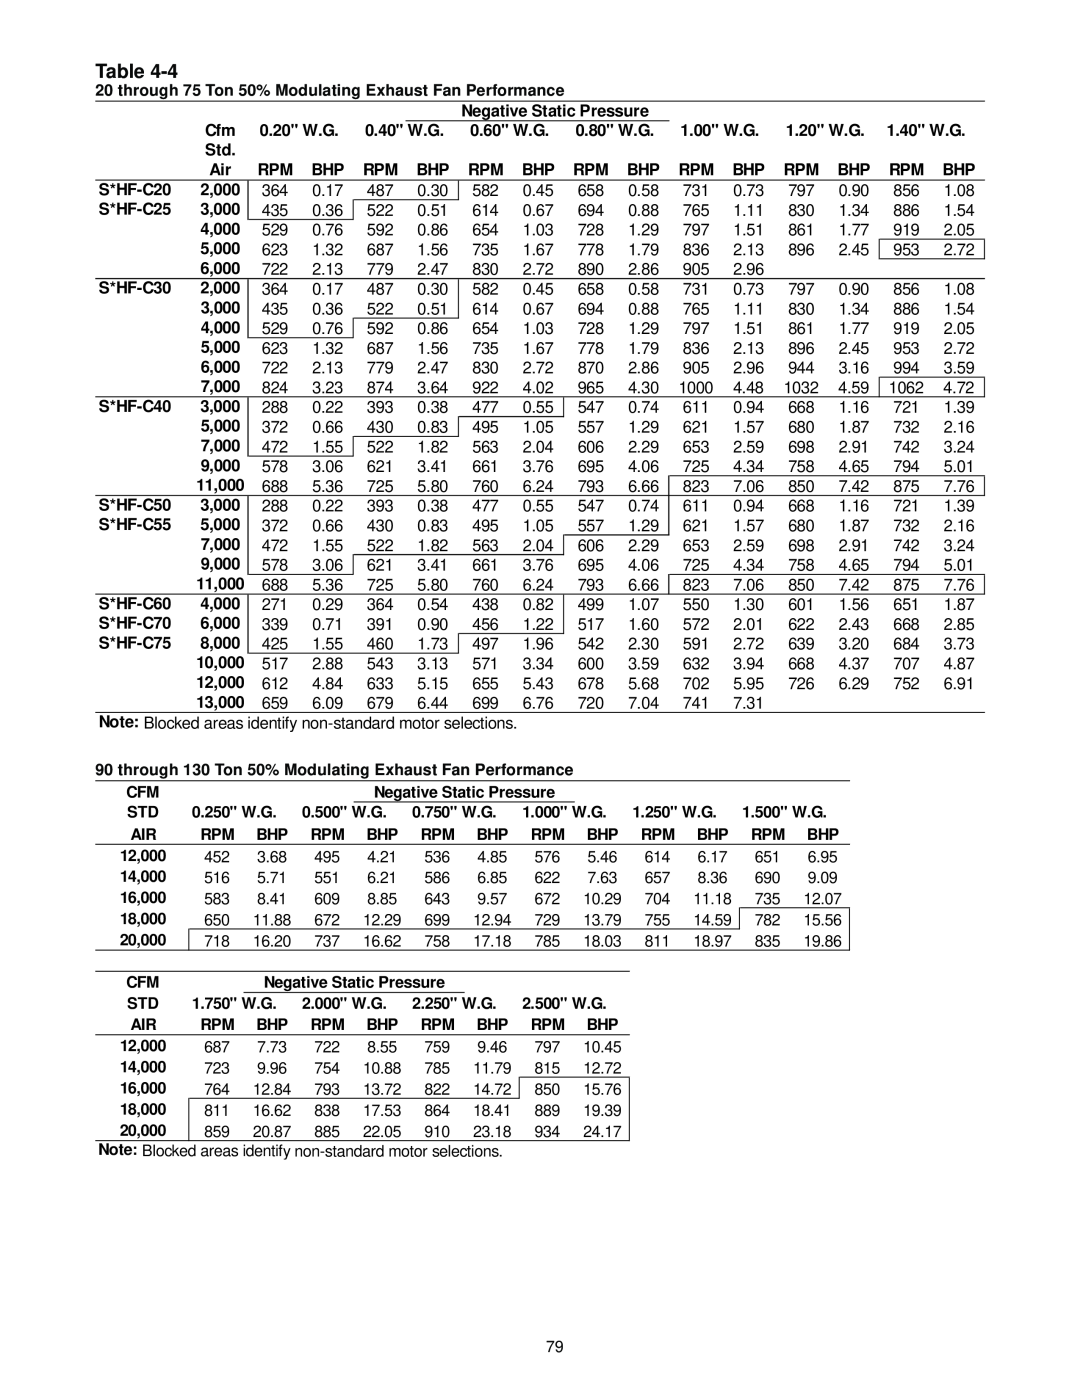 Trane RT-SVX10C-EN specifications Table, Negative Static Pressure 